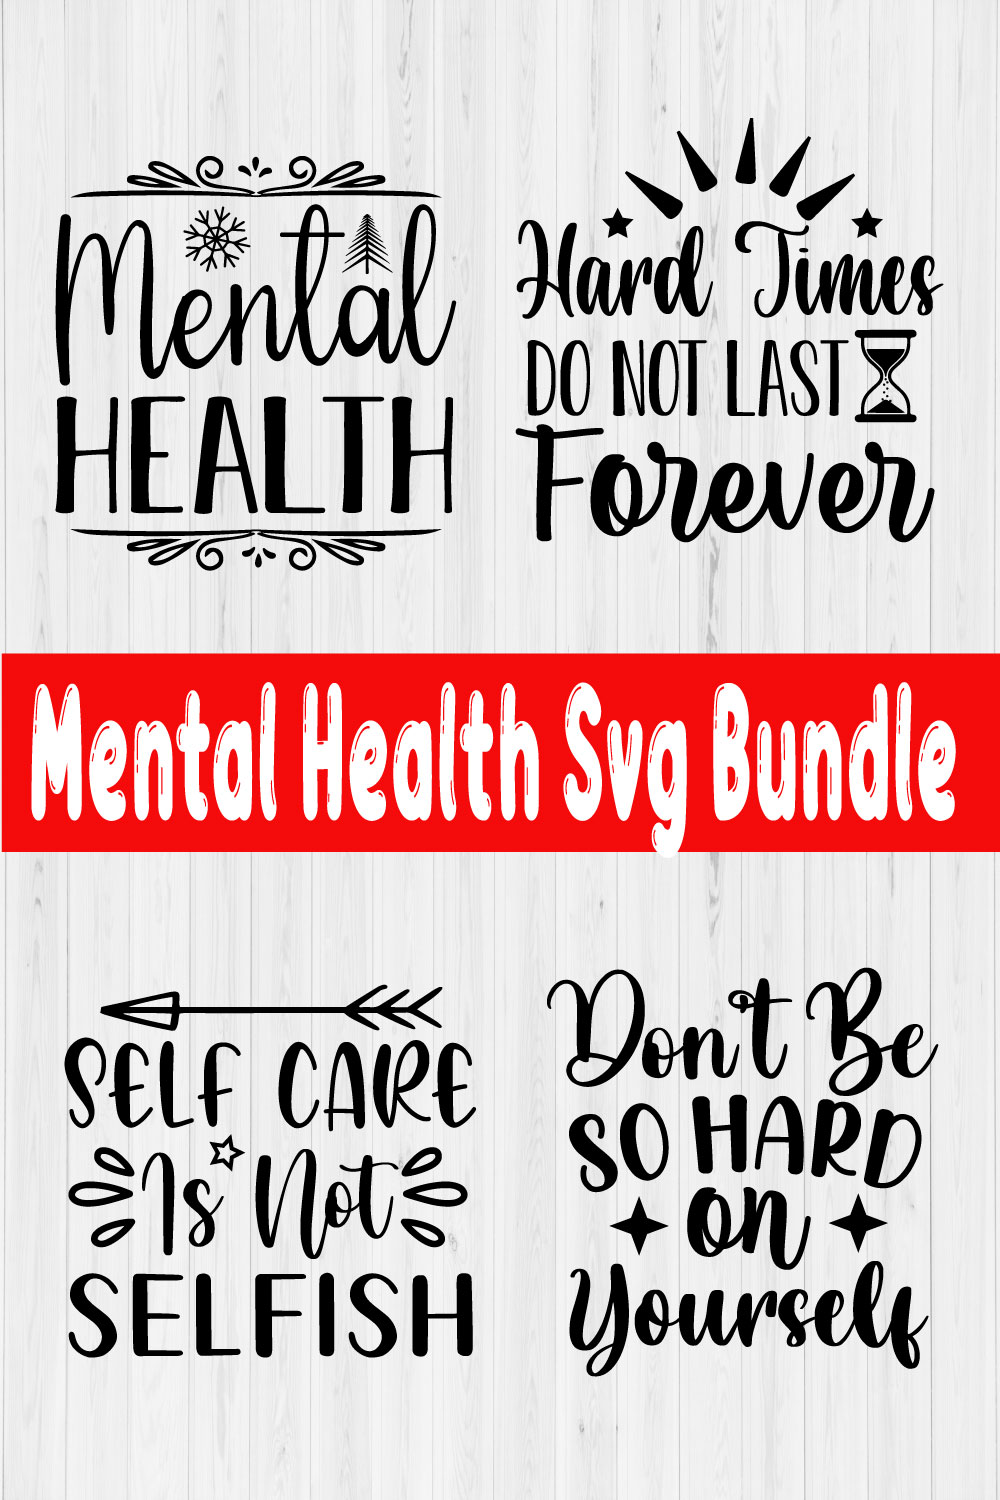 Mental Health Svg Bundle Vol1 pinterest preview image.